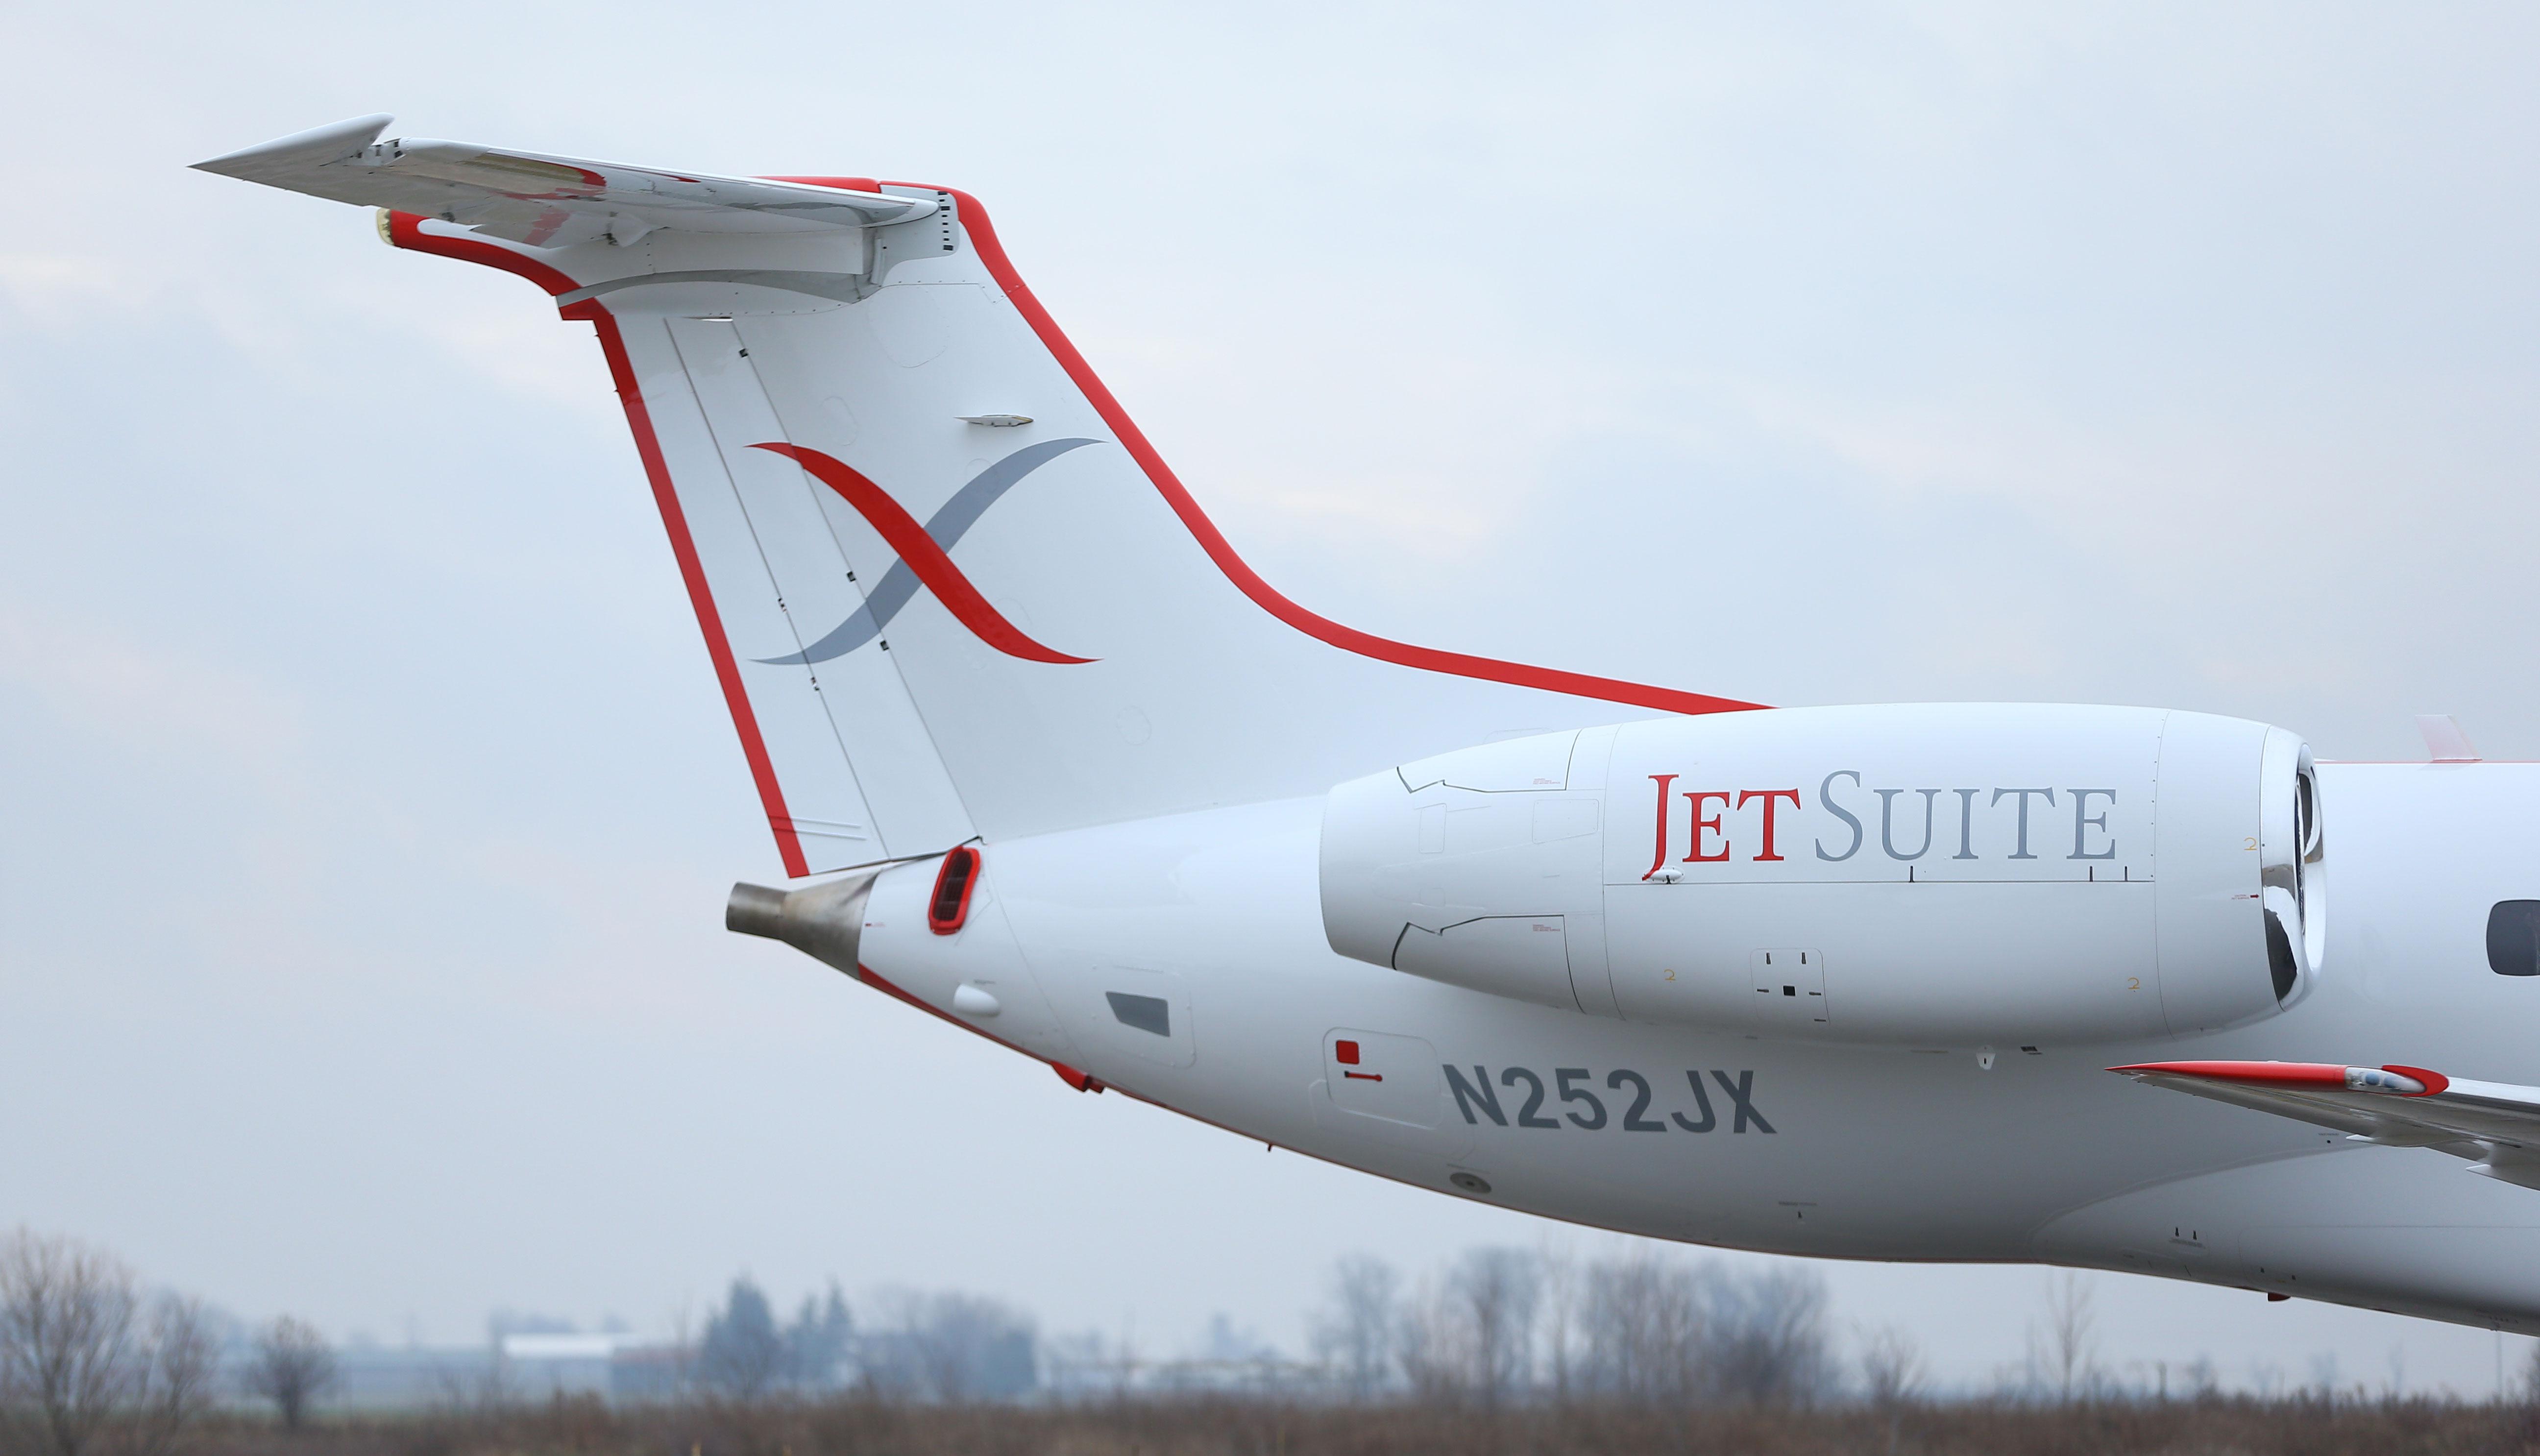 JetSuite X